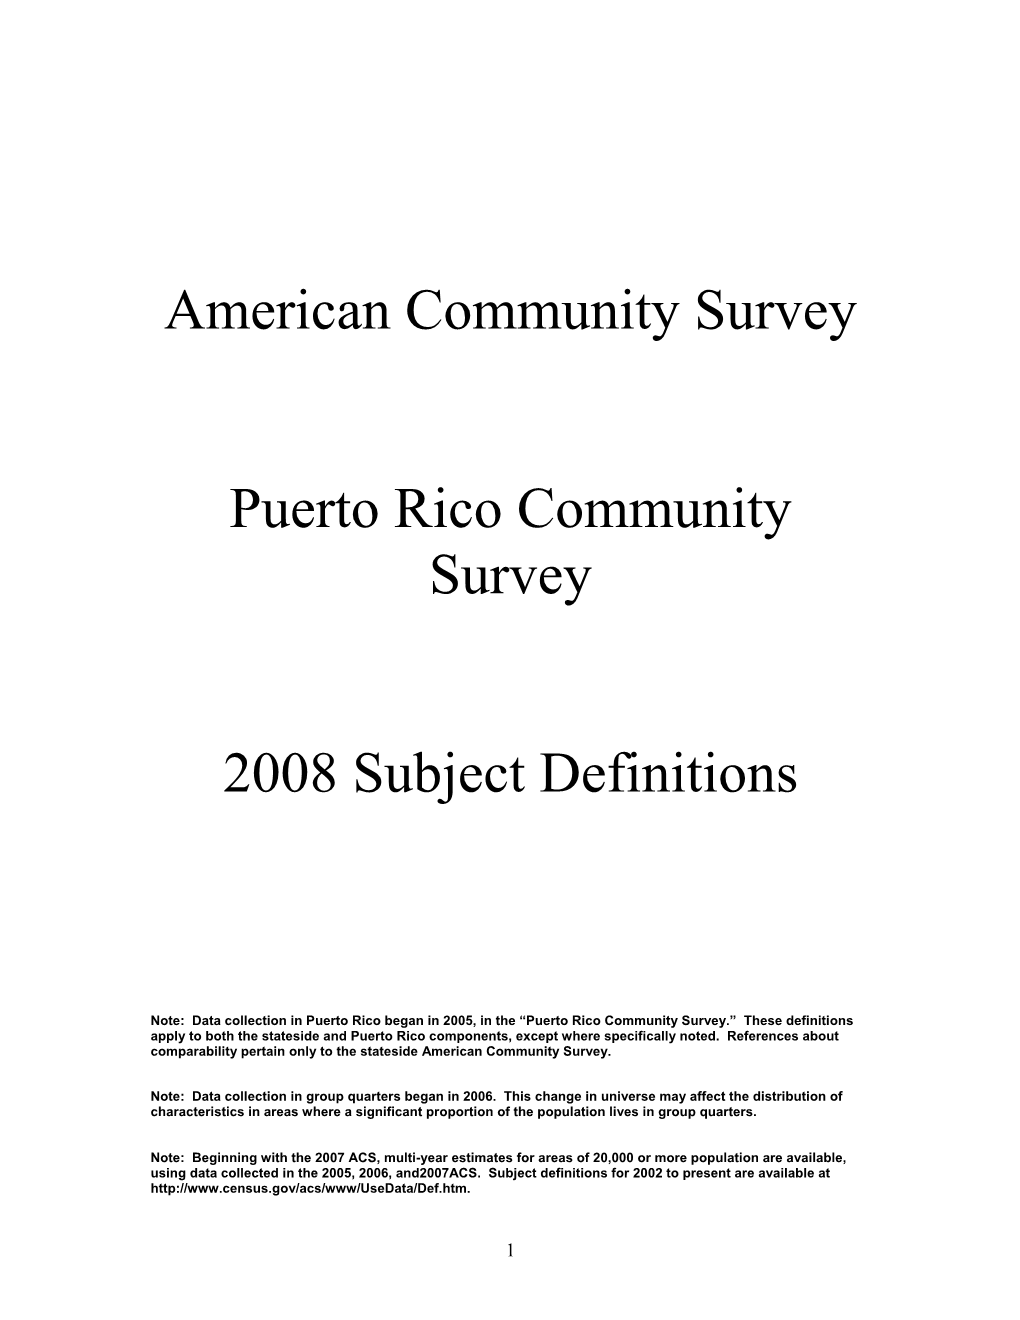 American Community Survey Puerto Rico Community Survey 2008 Subject Definitions